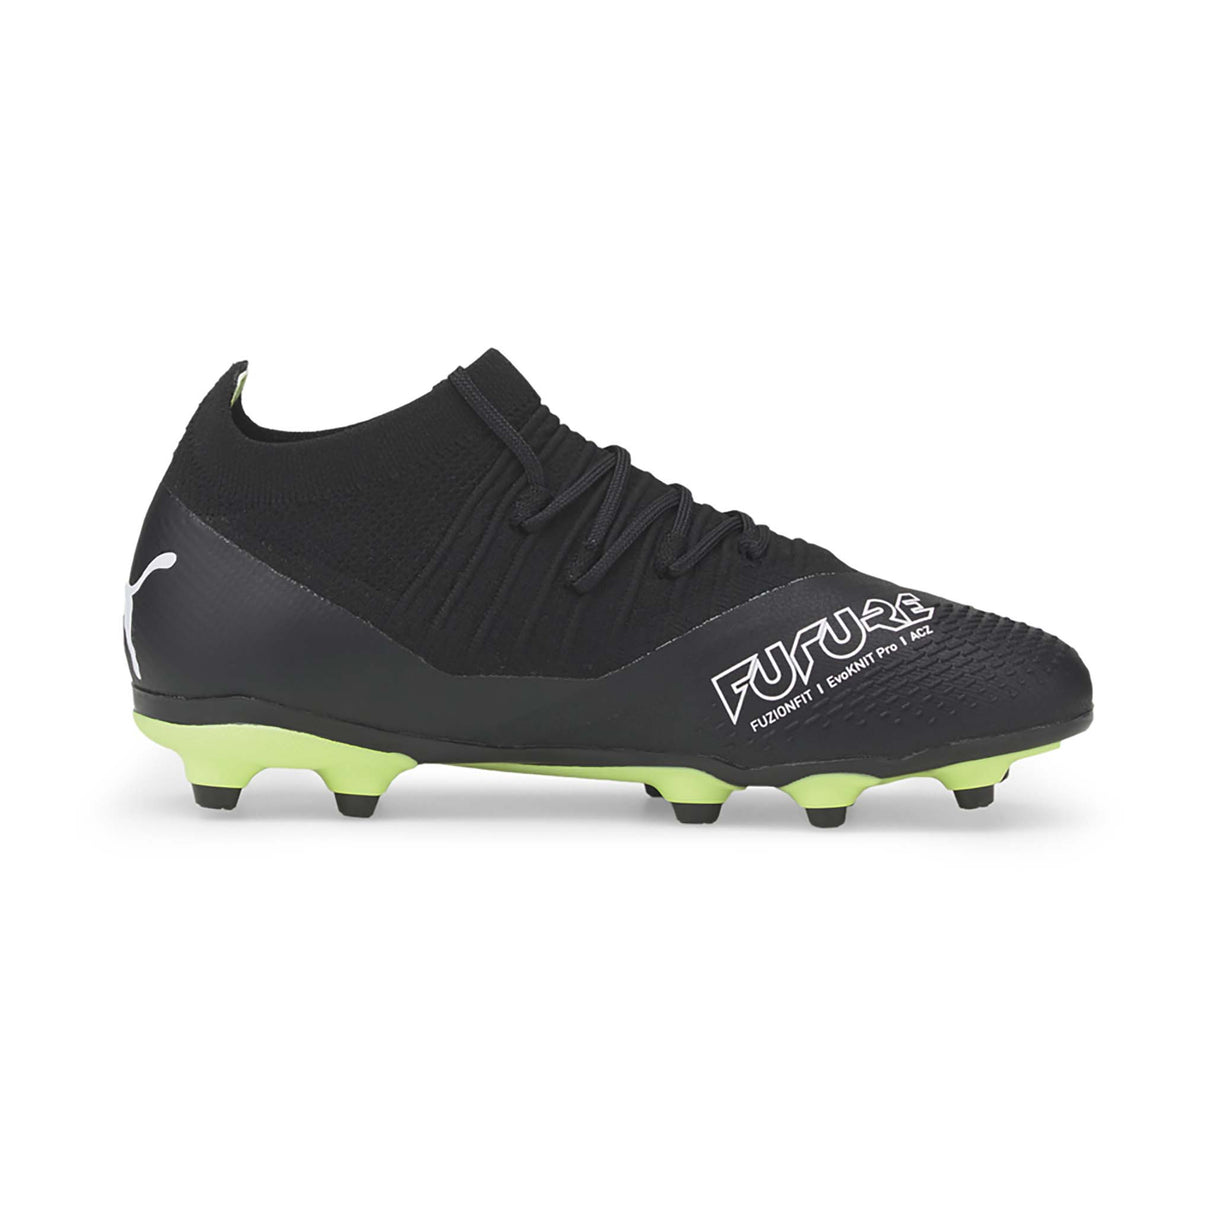 Puma Future Z 3.3 FG/AG souliers de soccer junior black white lateral